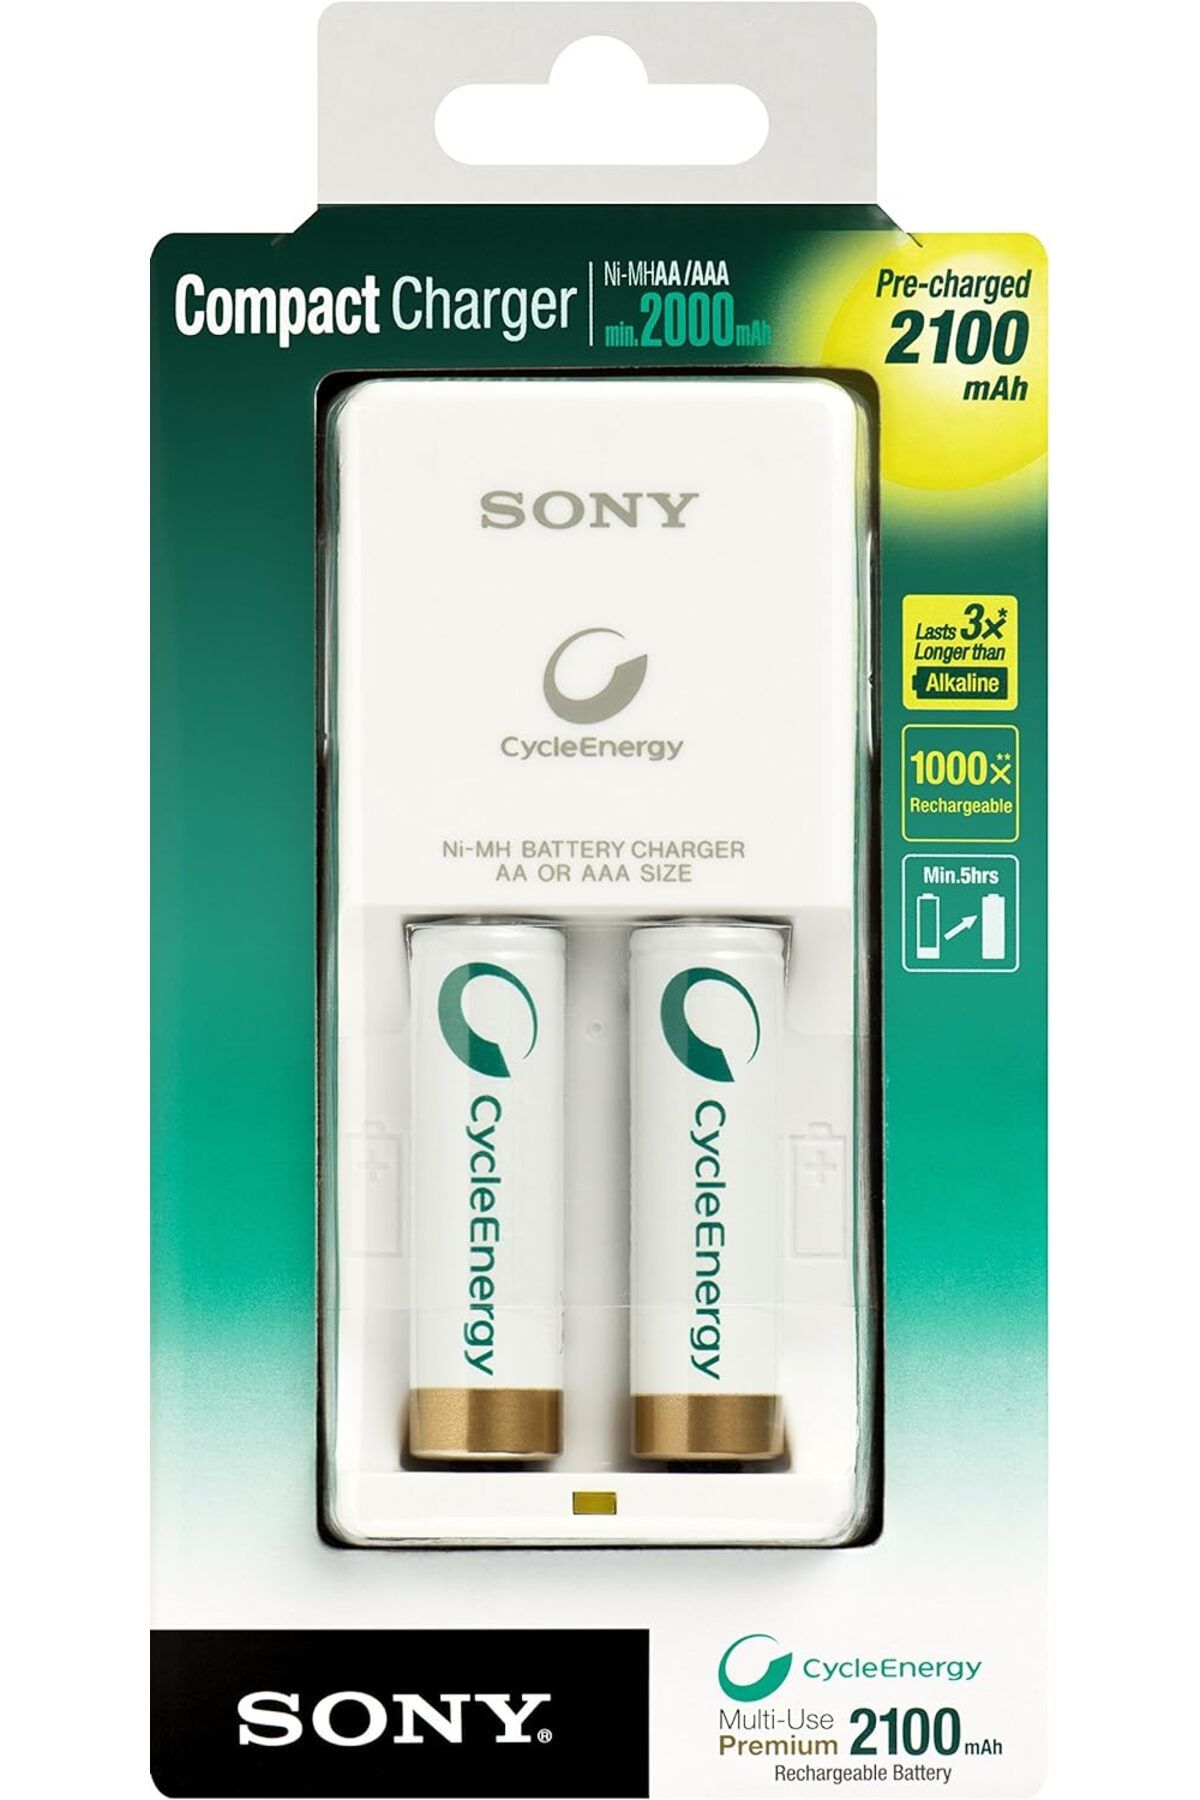 Sony Compact-Charger 2100mAh Şarjlı Pil 2li ve şarj cihazı